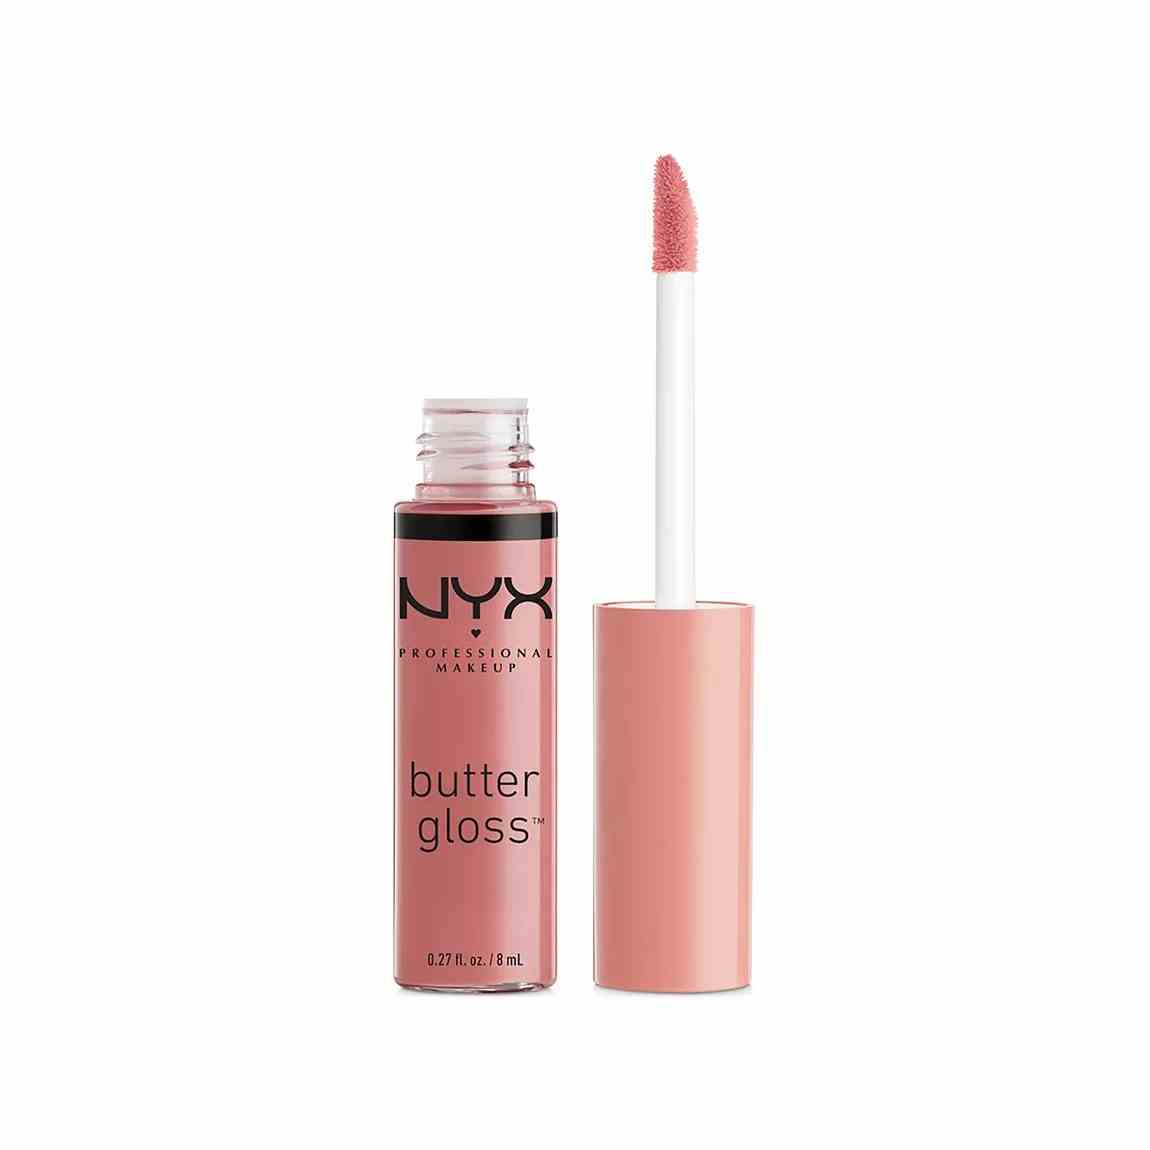 NYX Professional Makeup Butter Gloss transparente Tube Lipgloss in Nude-Pink mit Kappe in Nude-Pink und Fußapplikator auf weißem Hintergrund